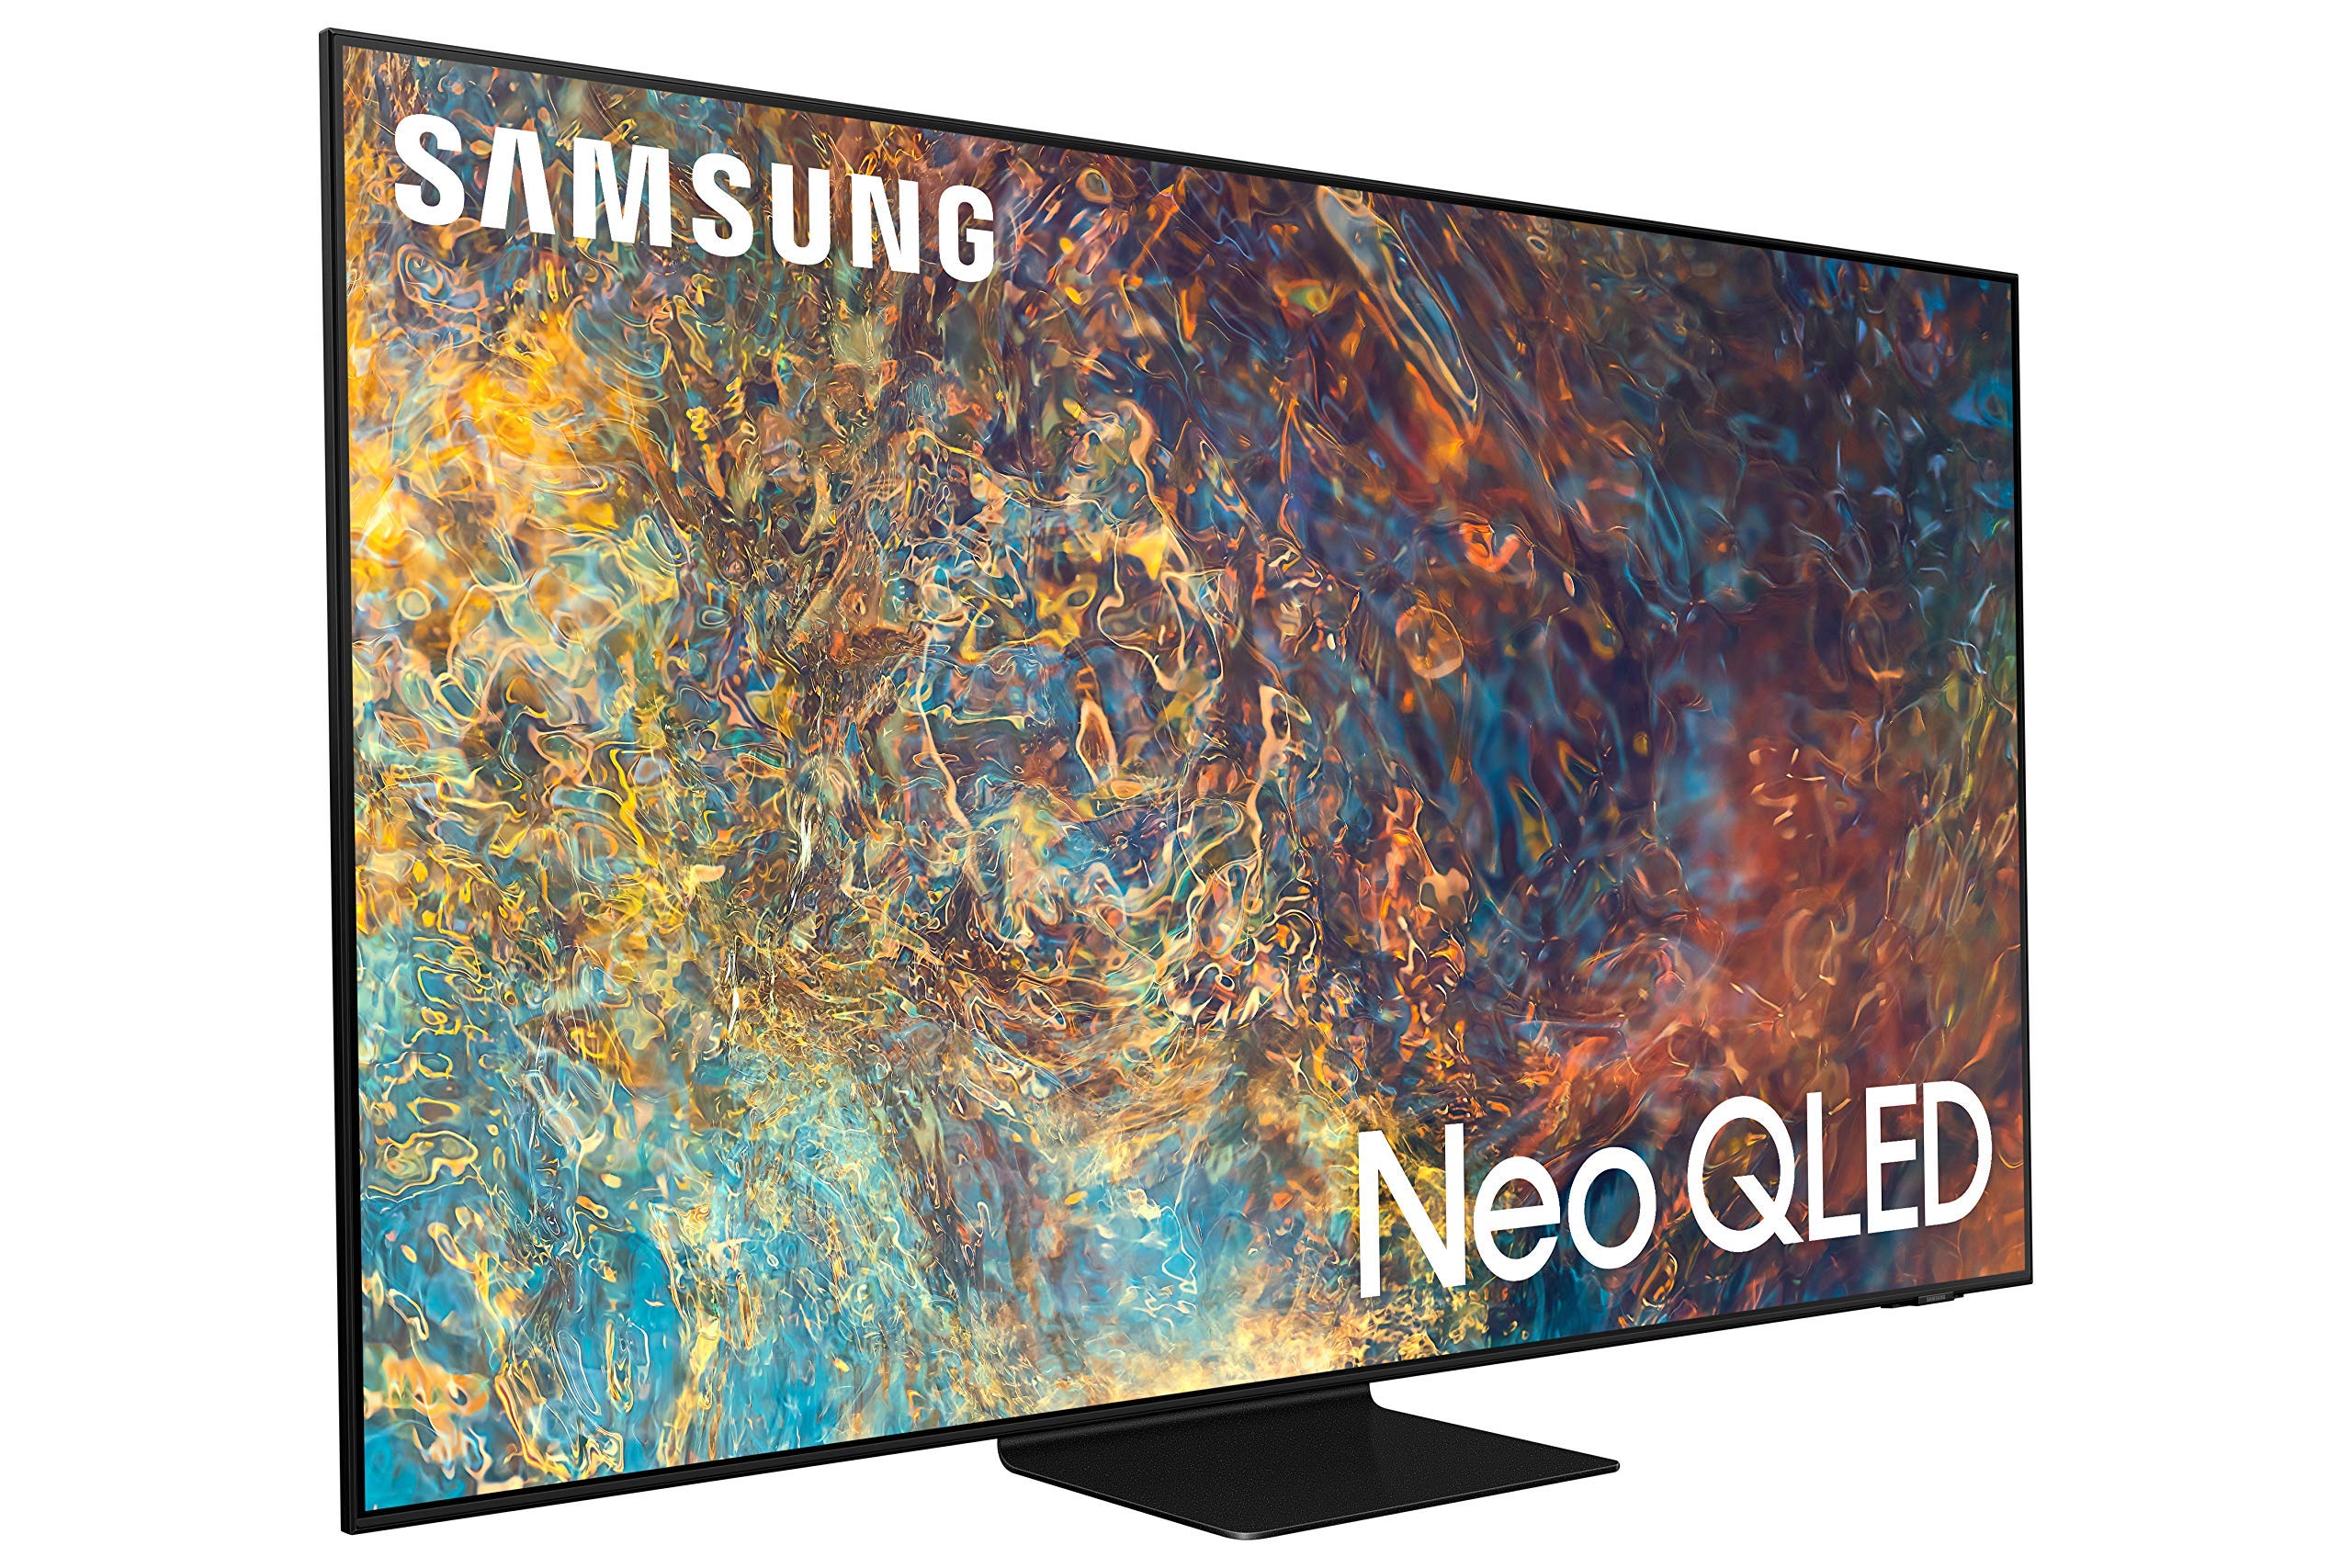 SAMSUNG QN65QN90A / QN65QN90AA / QN65QN90AA 65 inch QN90A Neo QLED 4K Smart TV (Renewed)